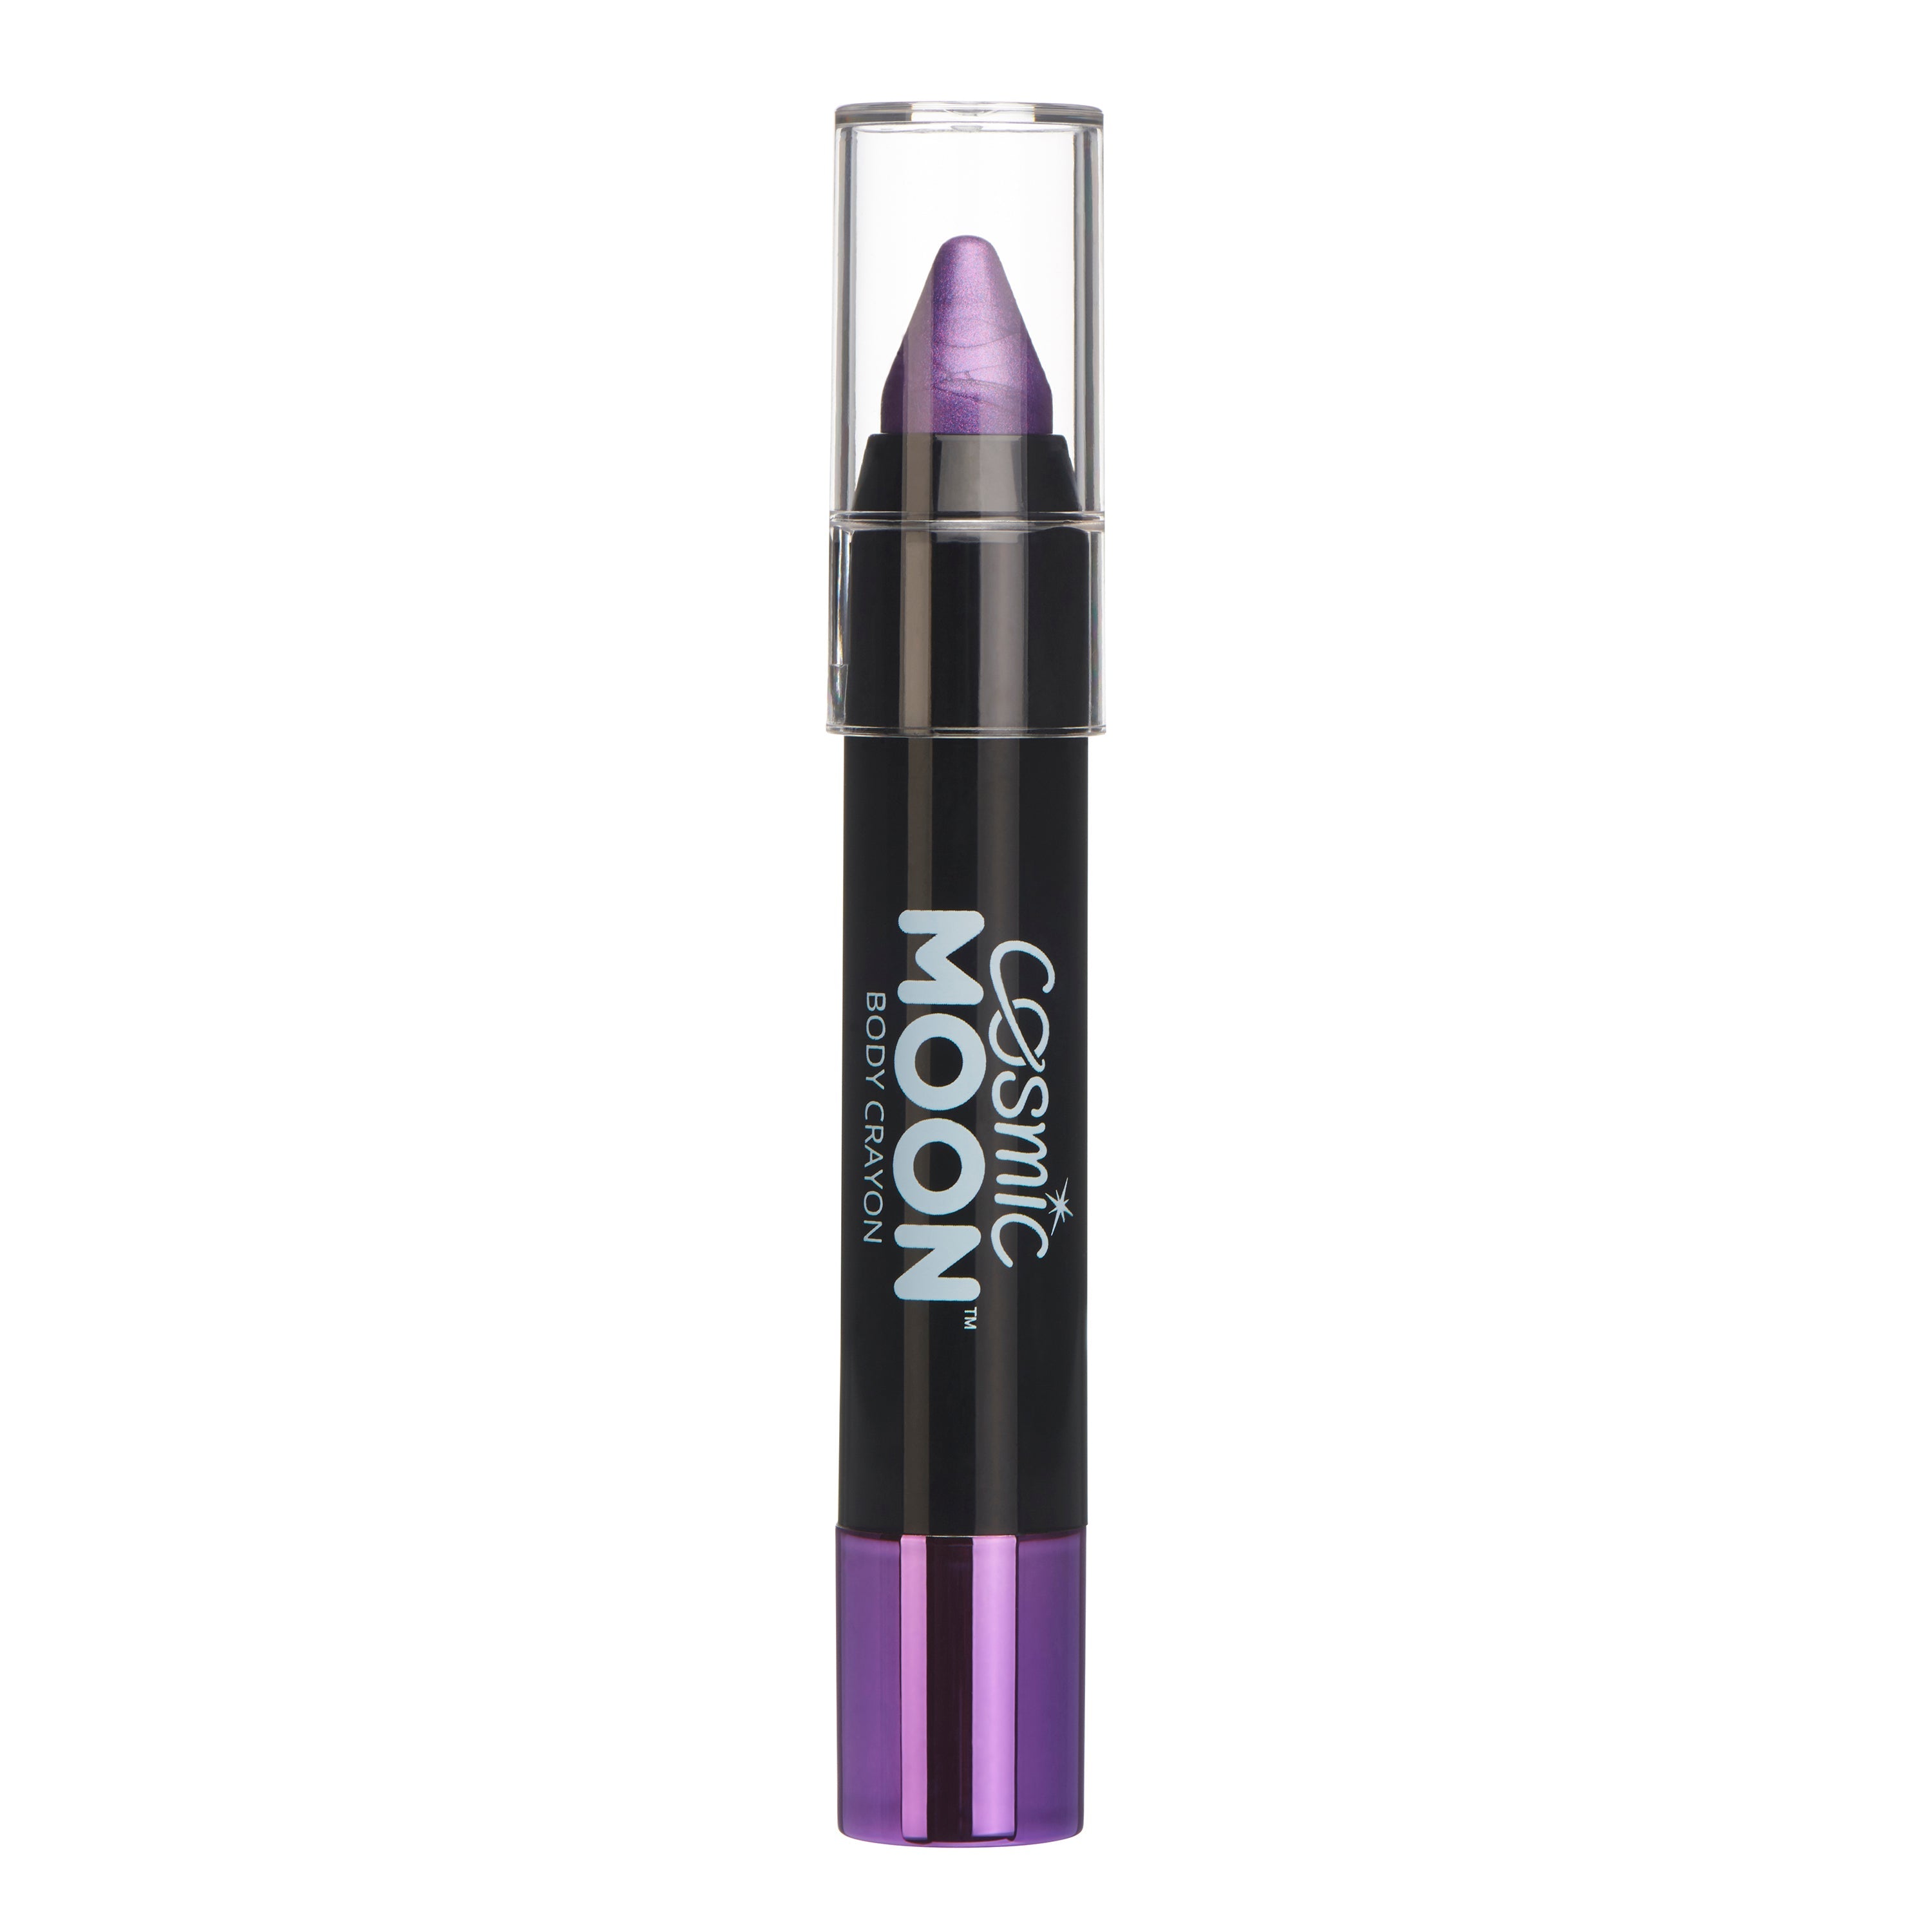 Purple - Metallic Face & Body Crayon, 3.5g. Cosmetically certified, FDA & Health Canada compliant and cruelty free.